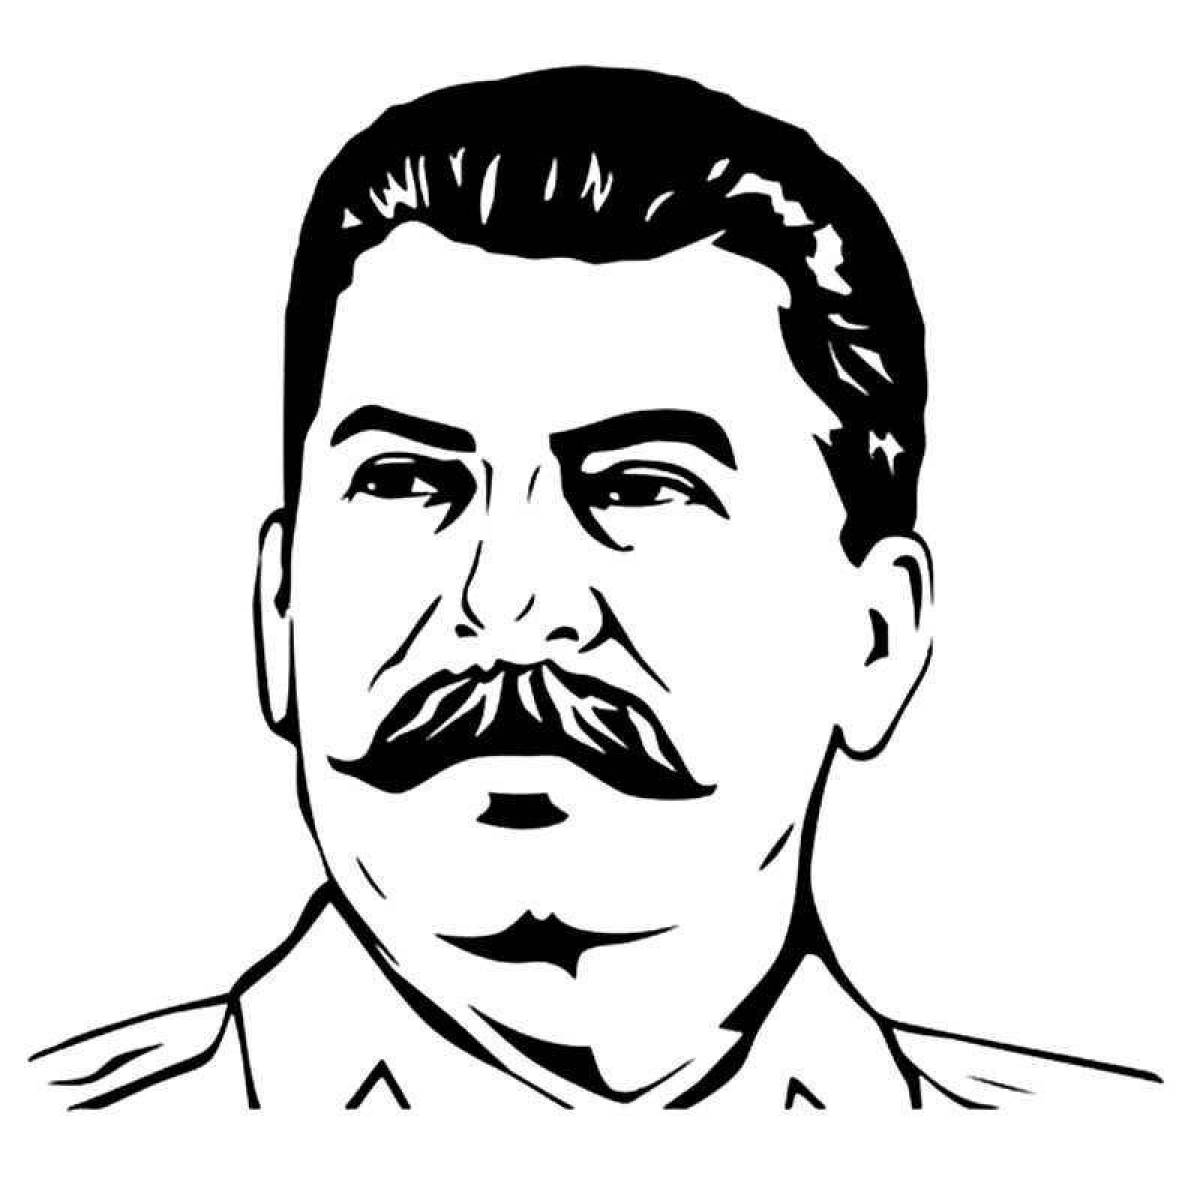 Exquisite Stalin coloring